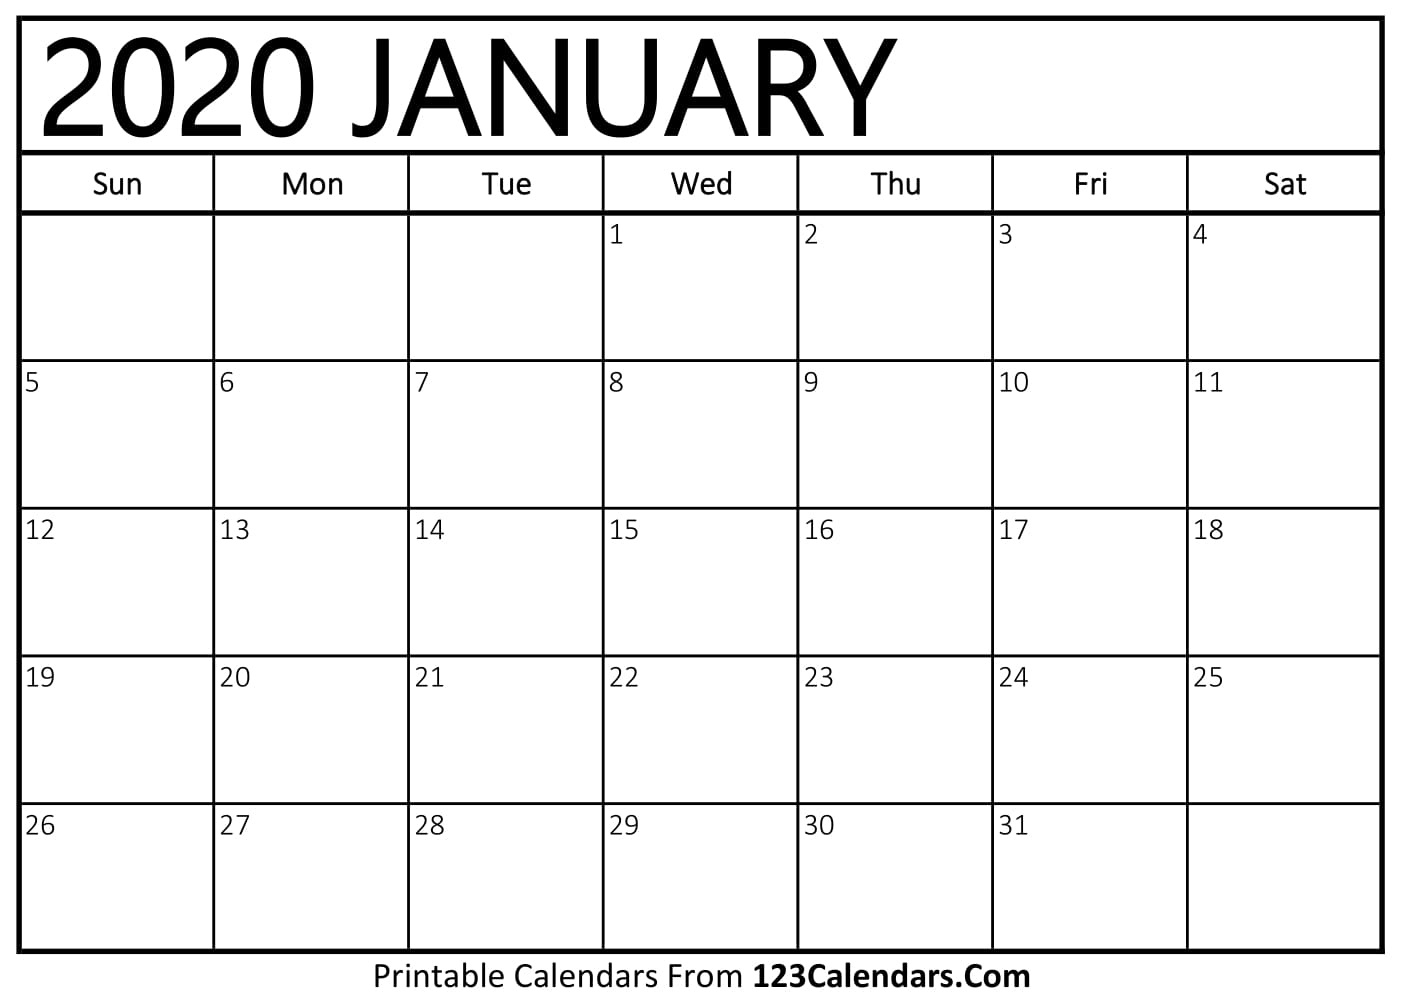 January 2020 Printable Calendar | 123Calendars